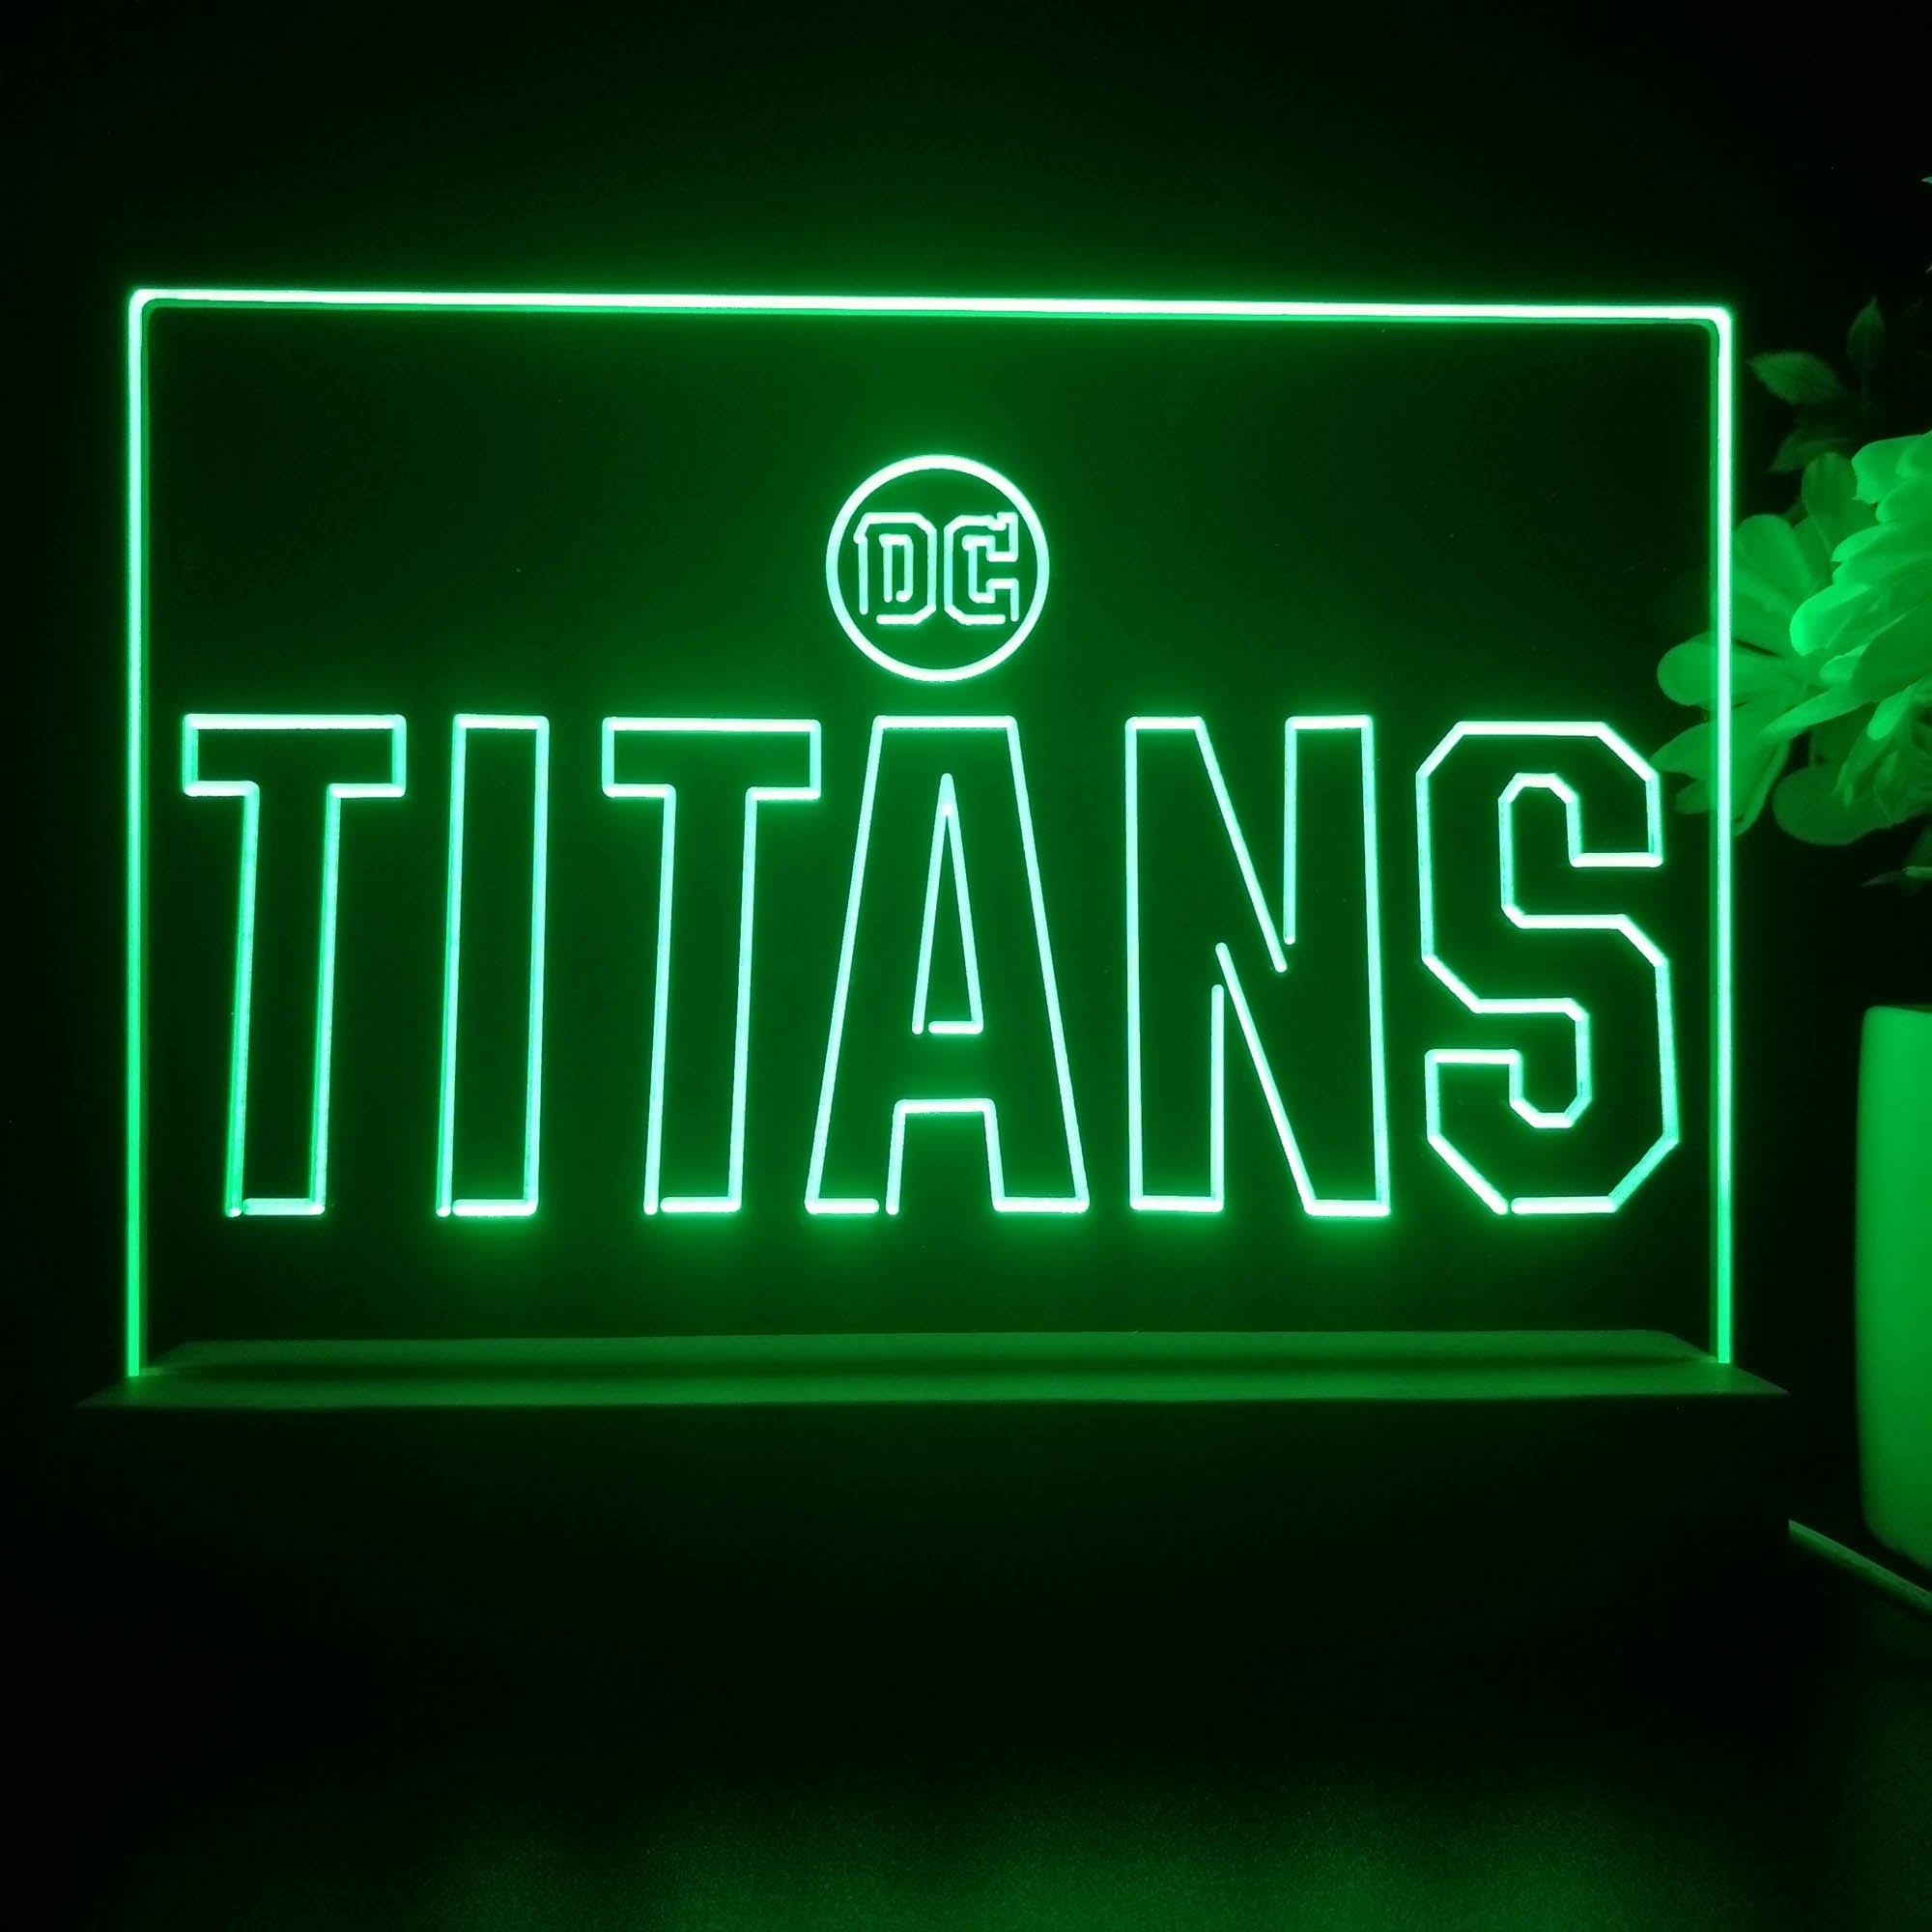 Titans 3D Illusion Night Light Desk Lamp